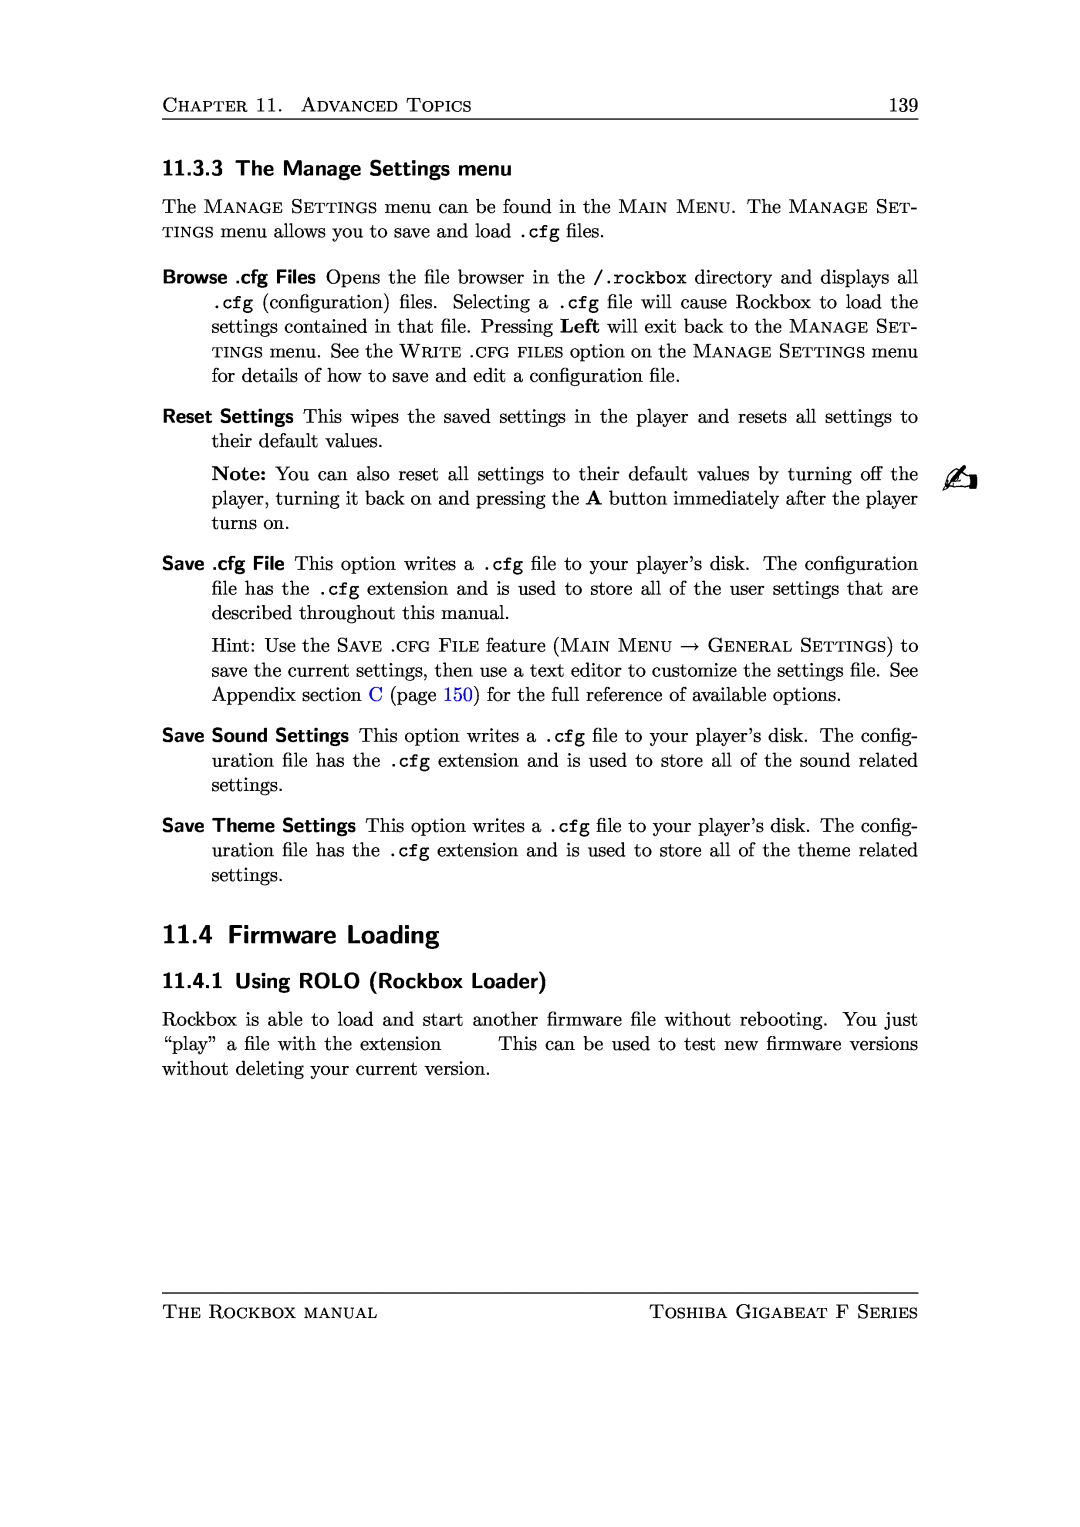 Toshiba F Series manual Firmware Loading, The Manage Settings menu, Using ROLO Rockbox Loader 